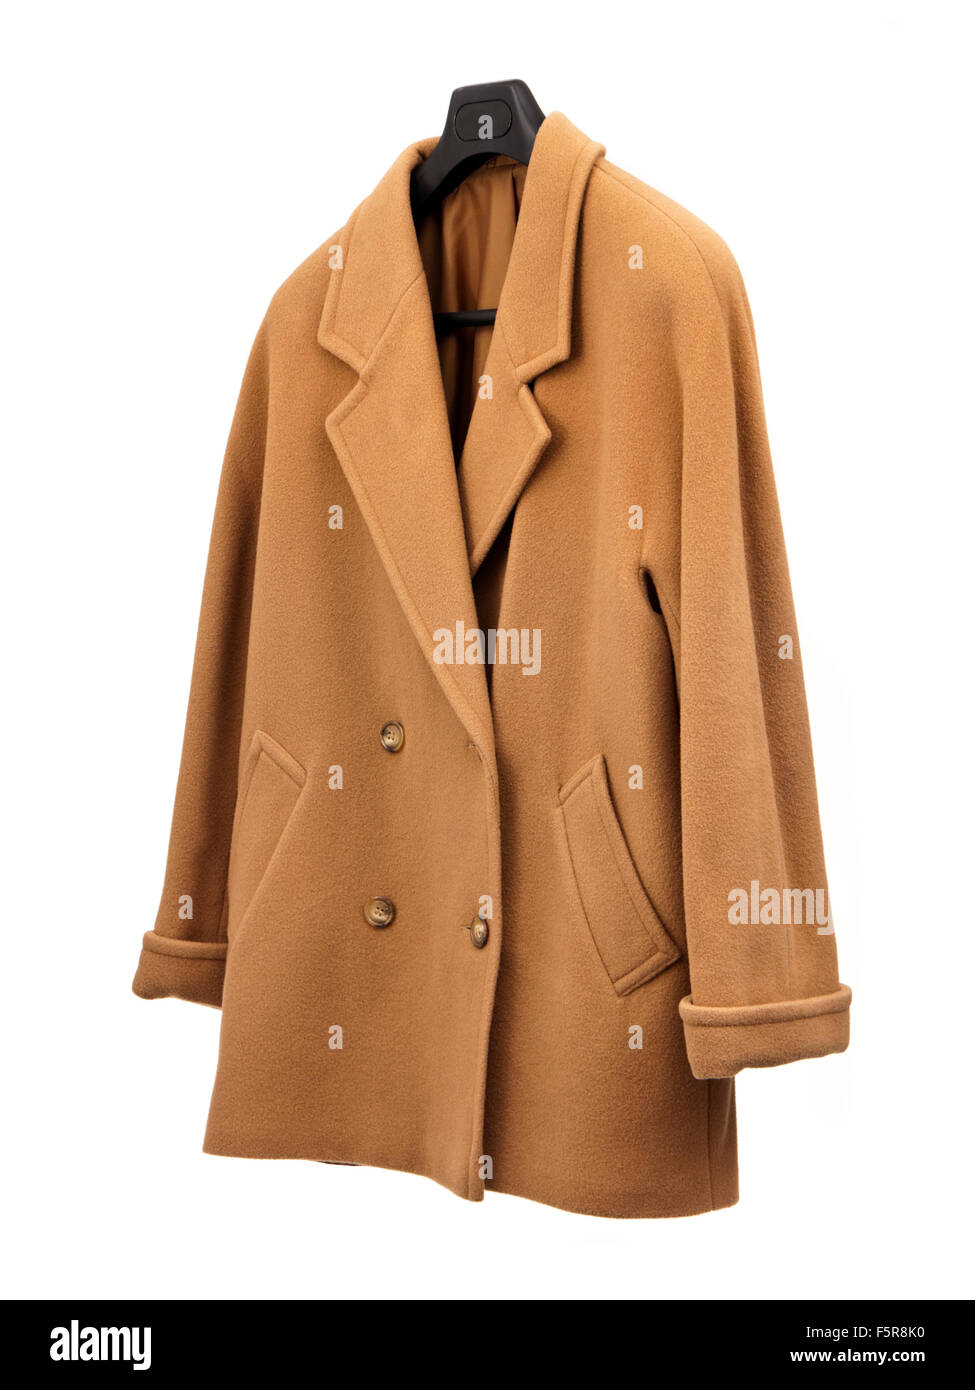 St Michael (Marks & Spencer) pure laine vierge manteau d'hiver Photo Stock  - Alamy